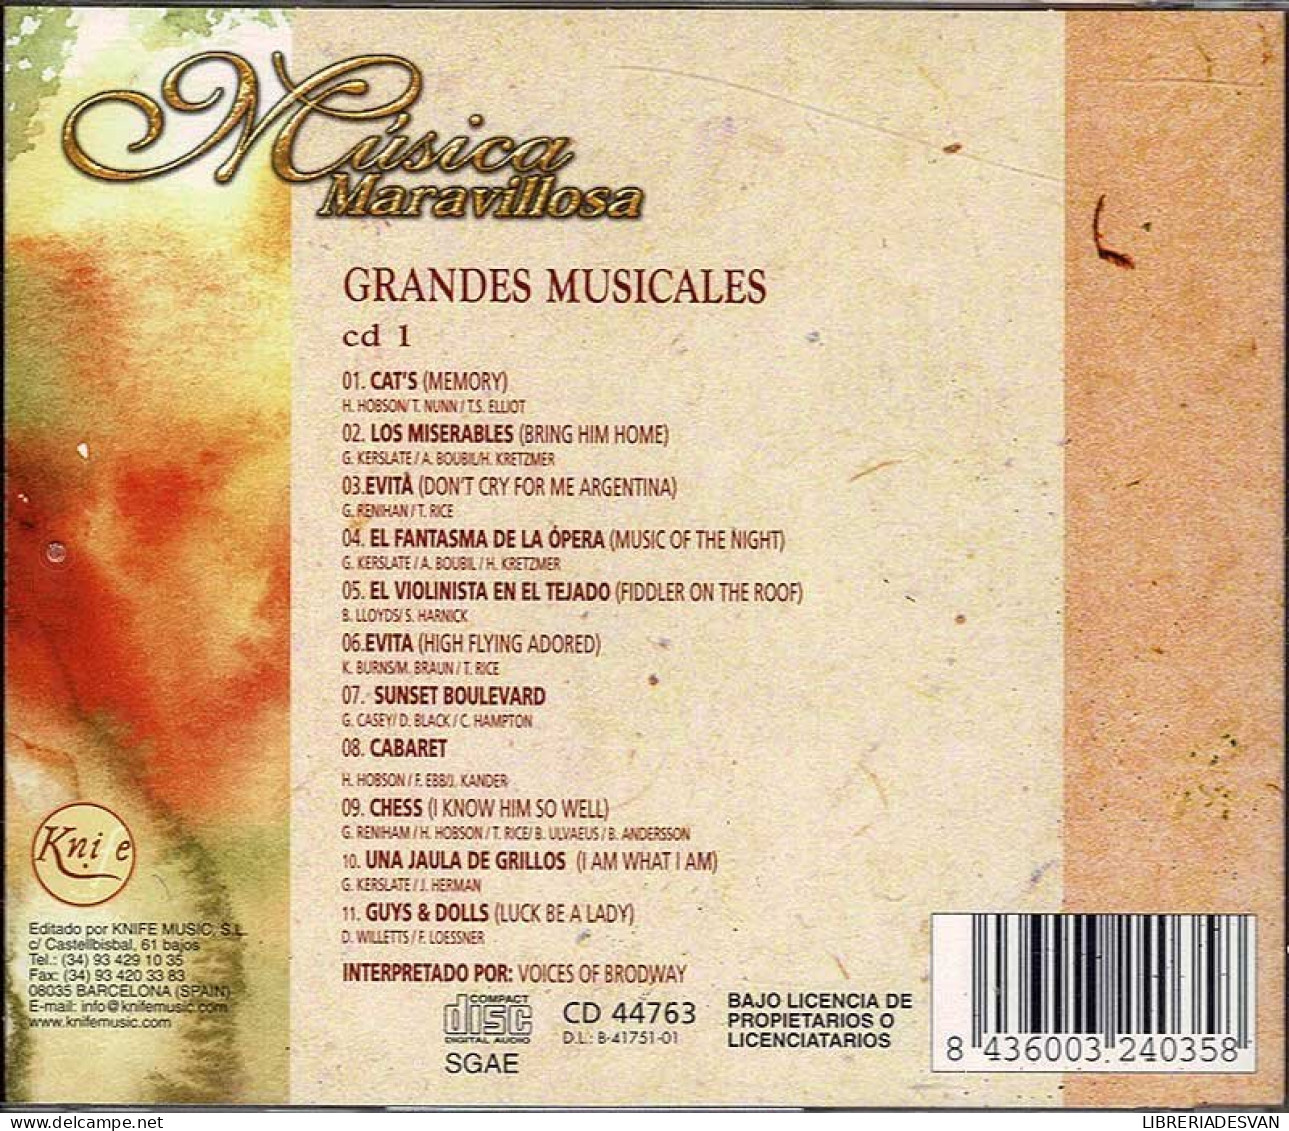 Música Maravillosa - Grandes Musicales. CD - Soundtracks, Film Music